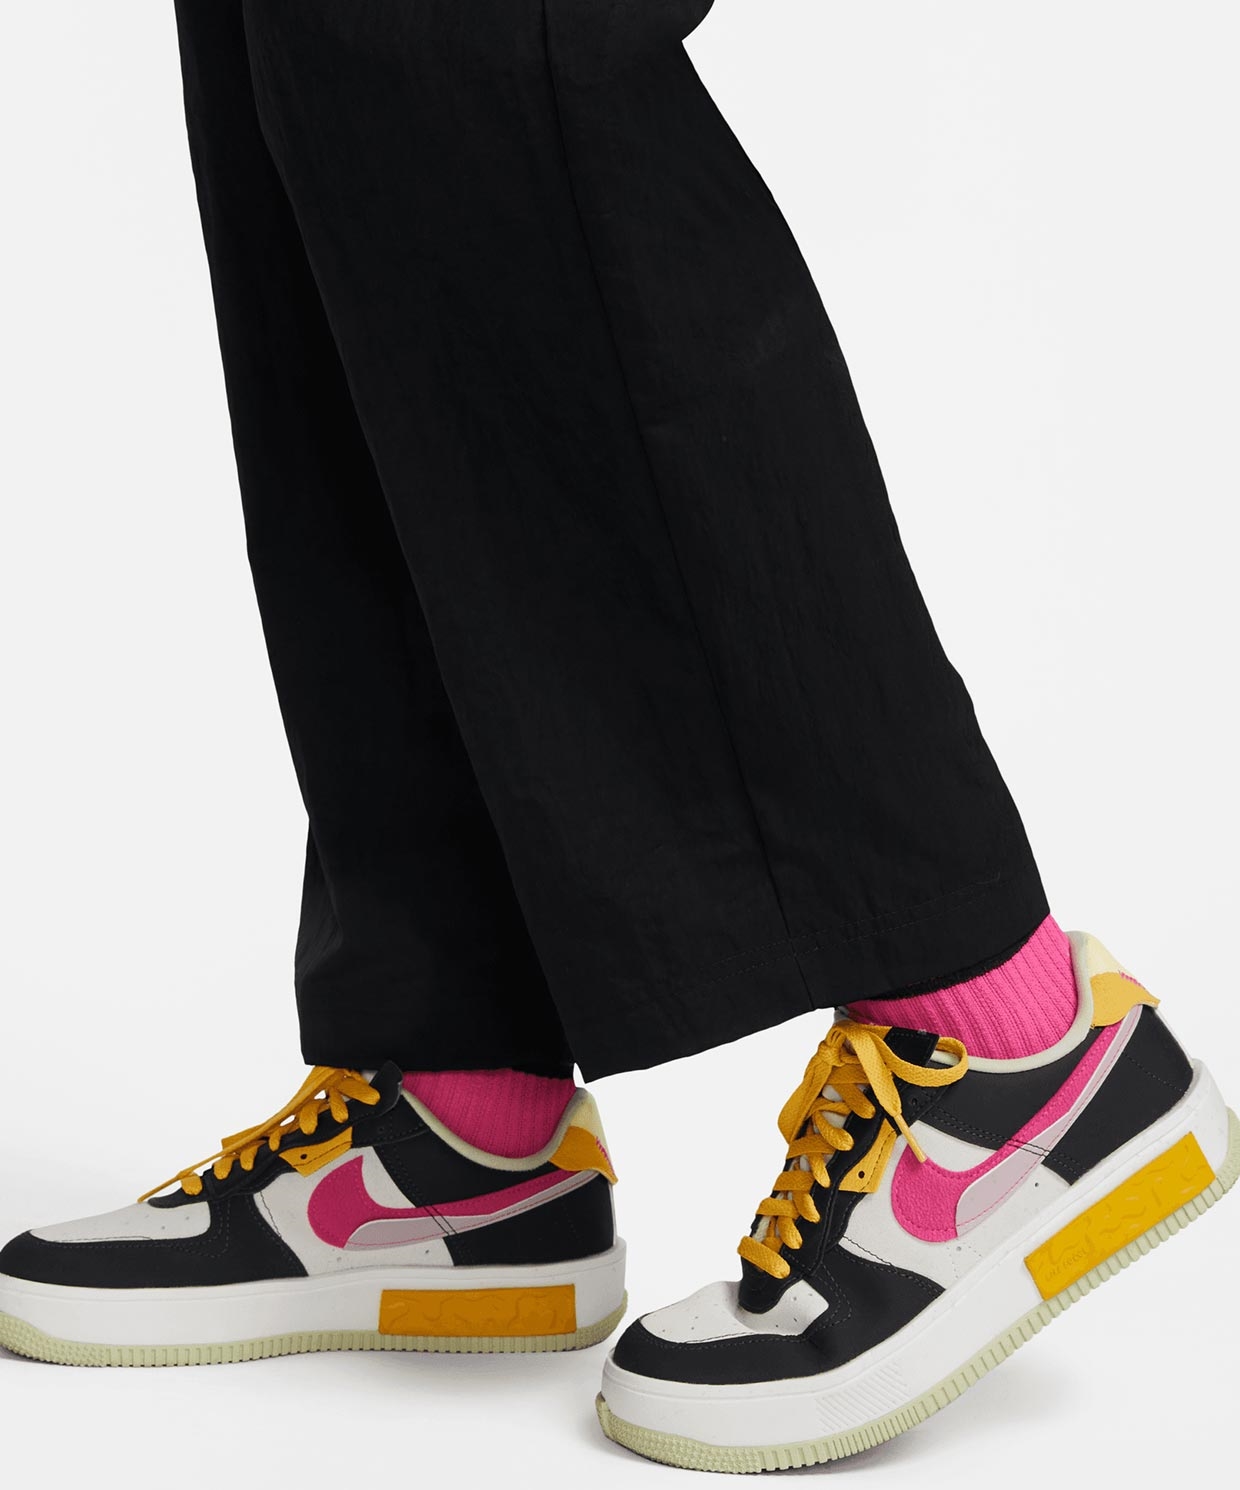 resm Nike Sportswear Essential Kargo Pantolon